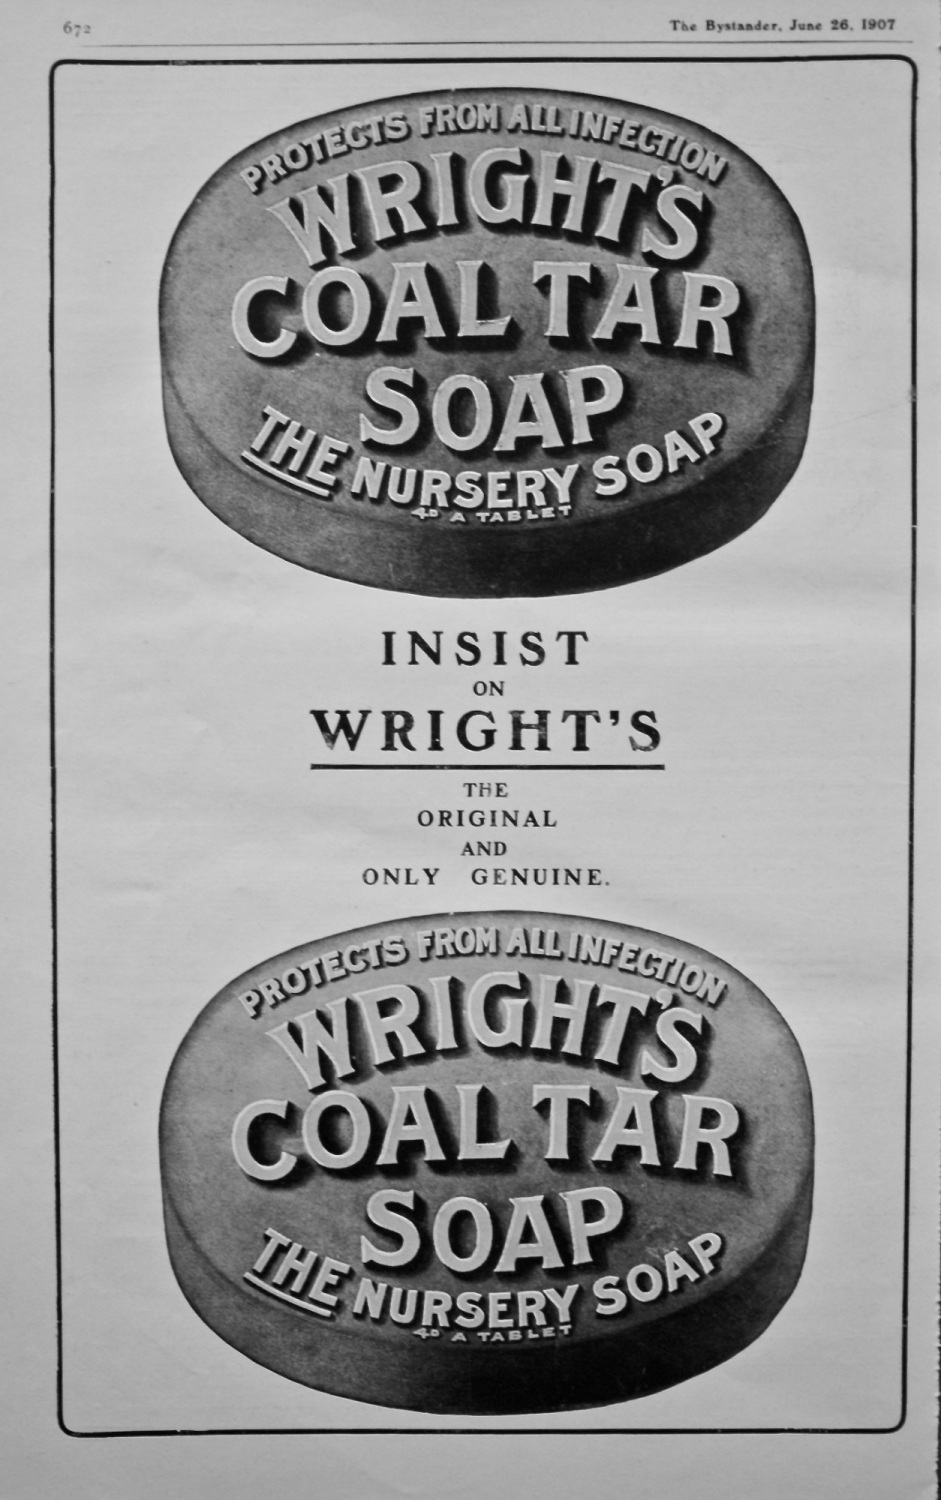 Wright's Coal Tar Soap. 1907